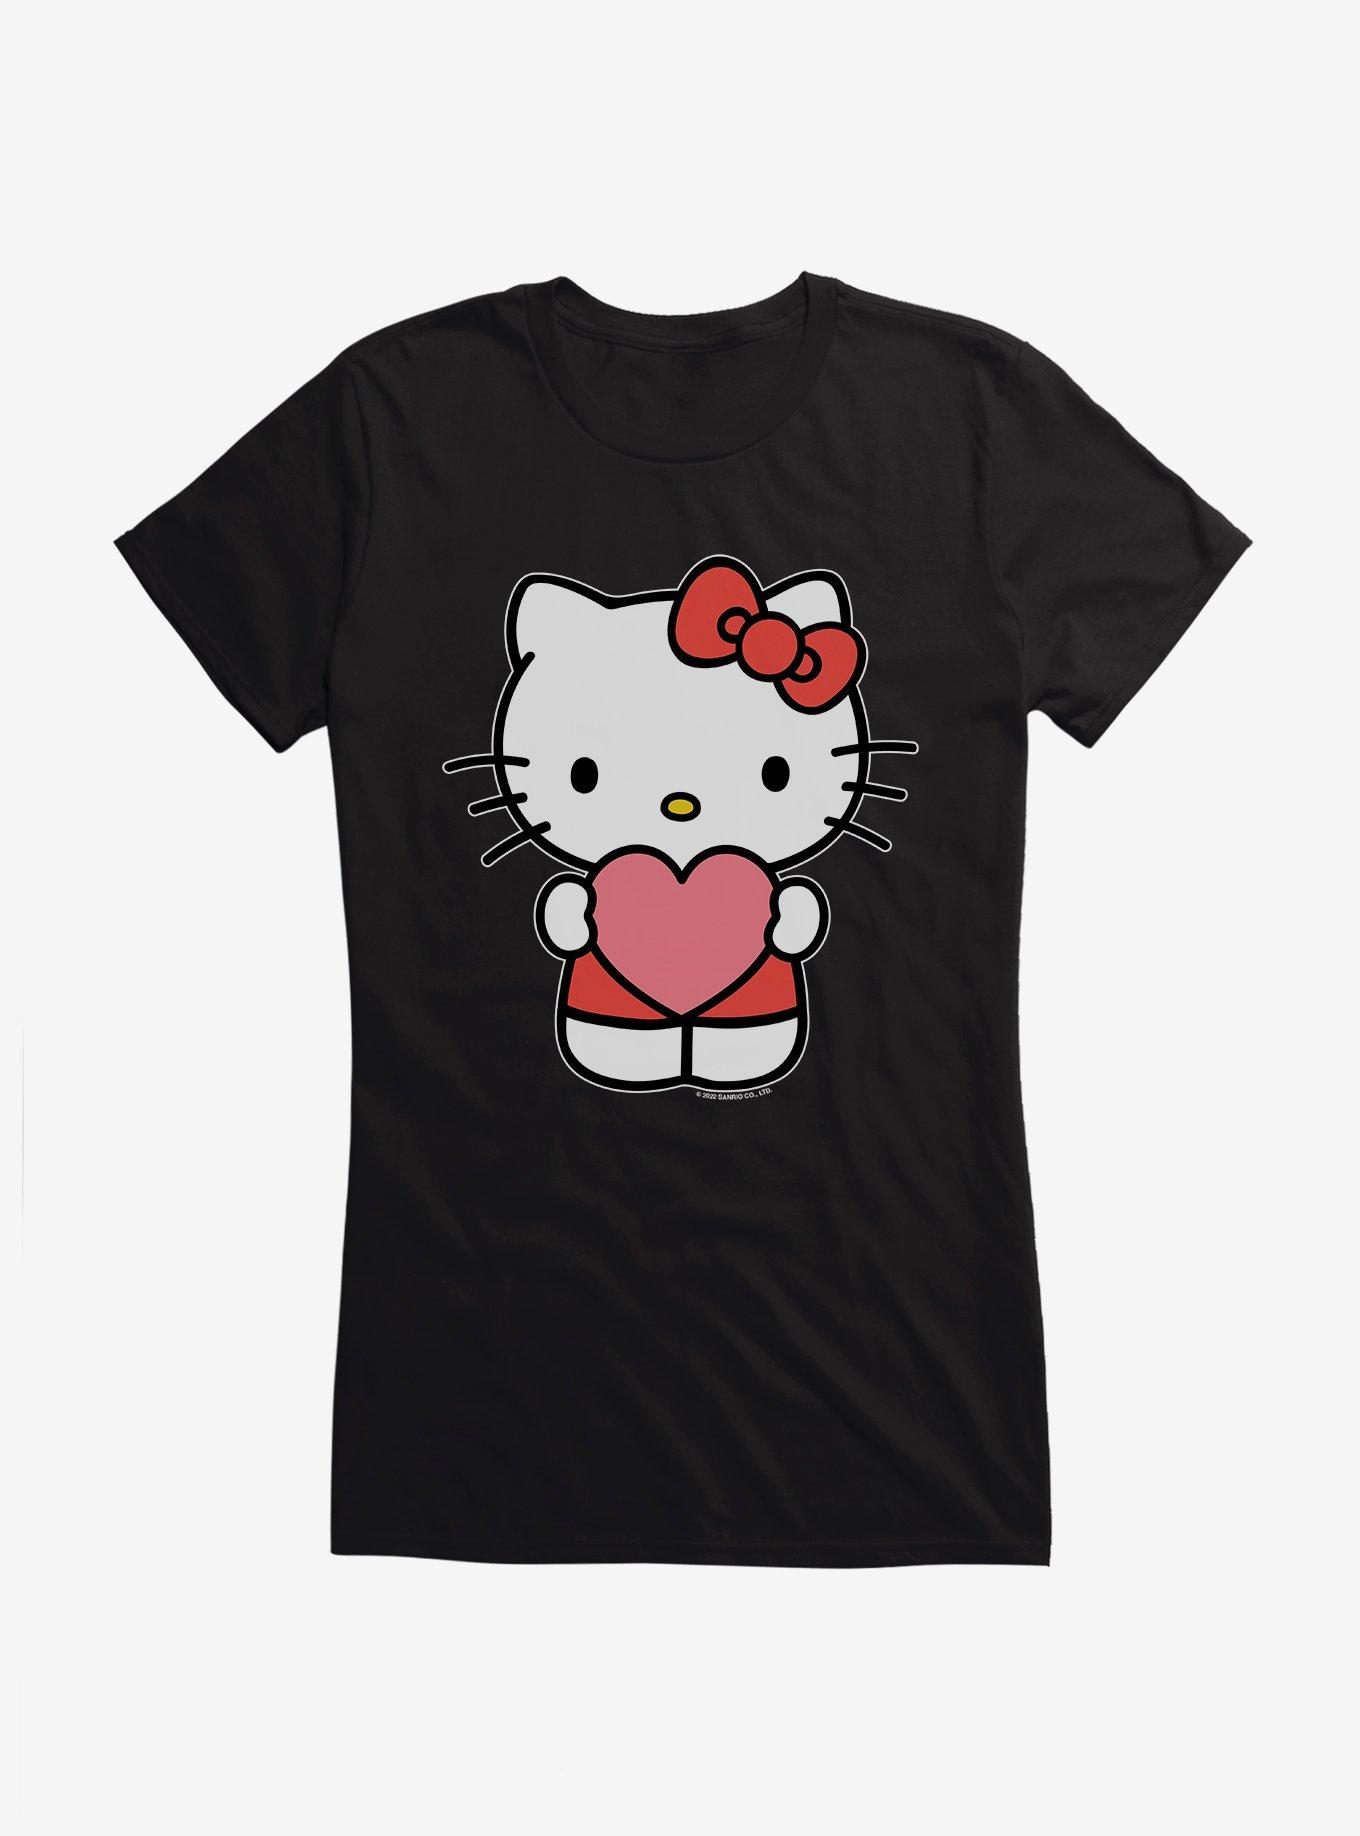 Hello Kitty Heart Girls T-Shirt, BLACK, hi-res